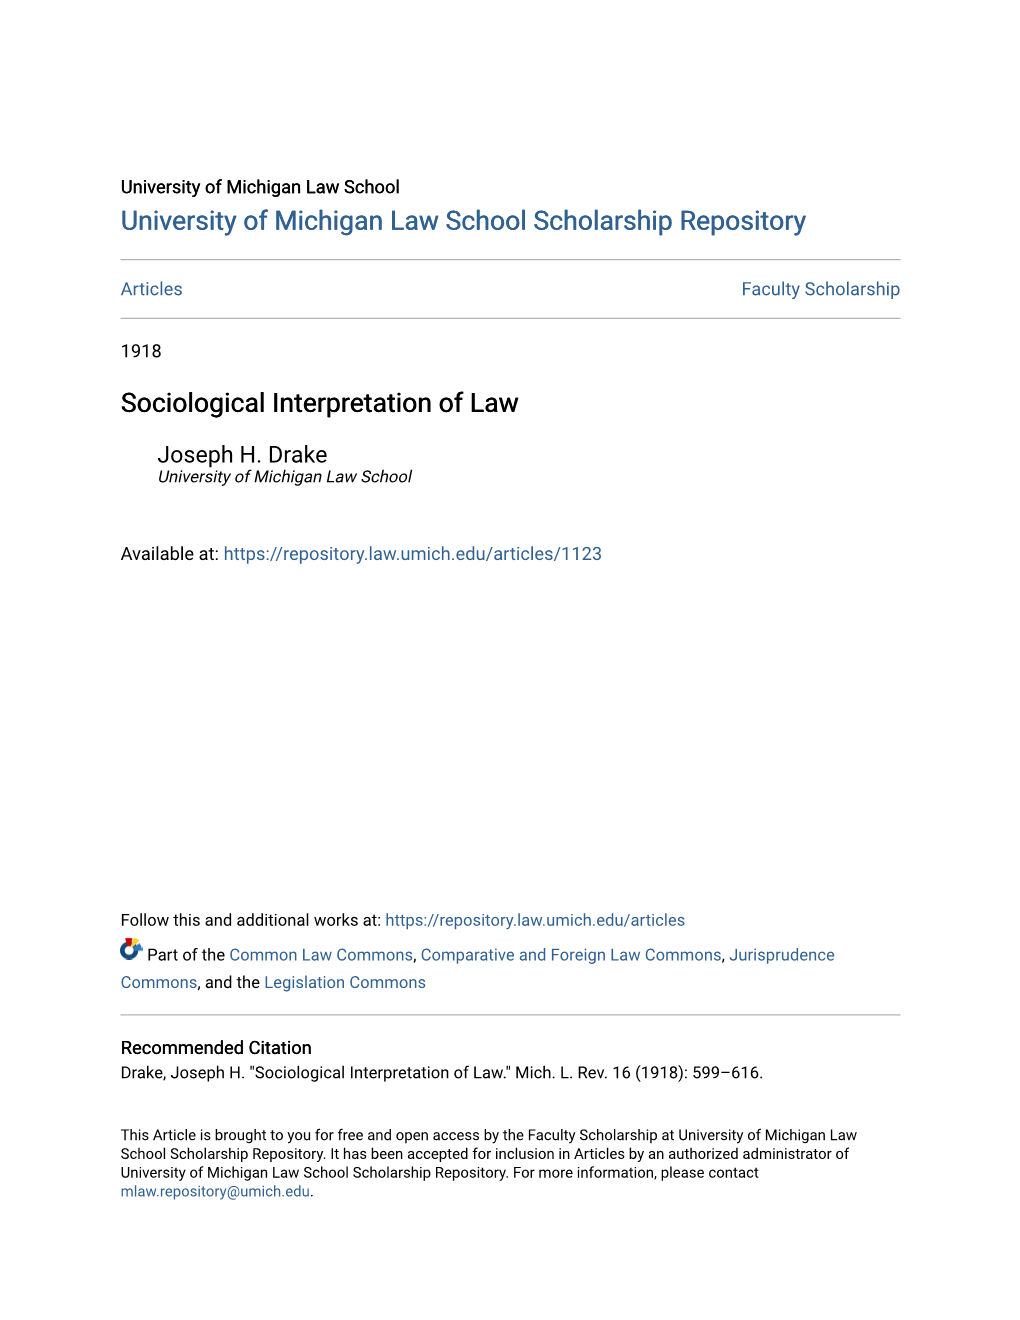 Sociological Interpretation of Law